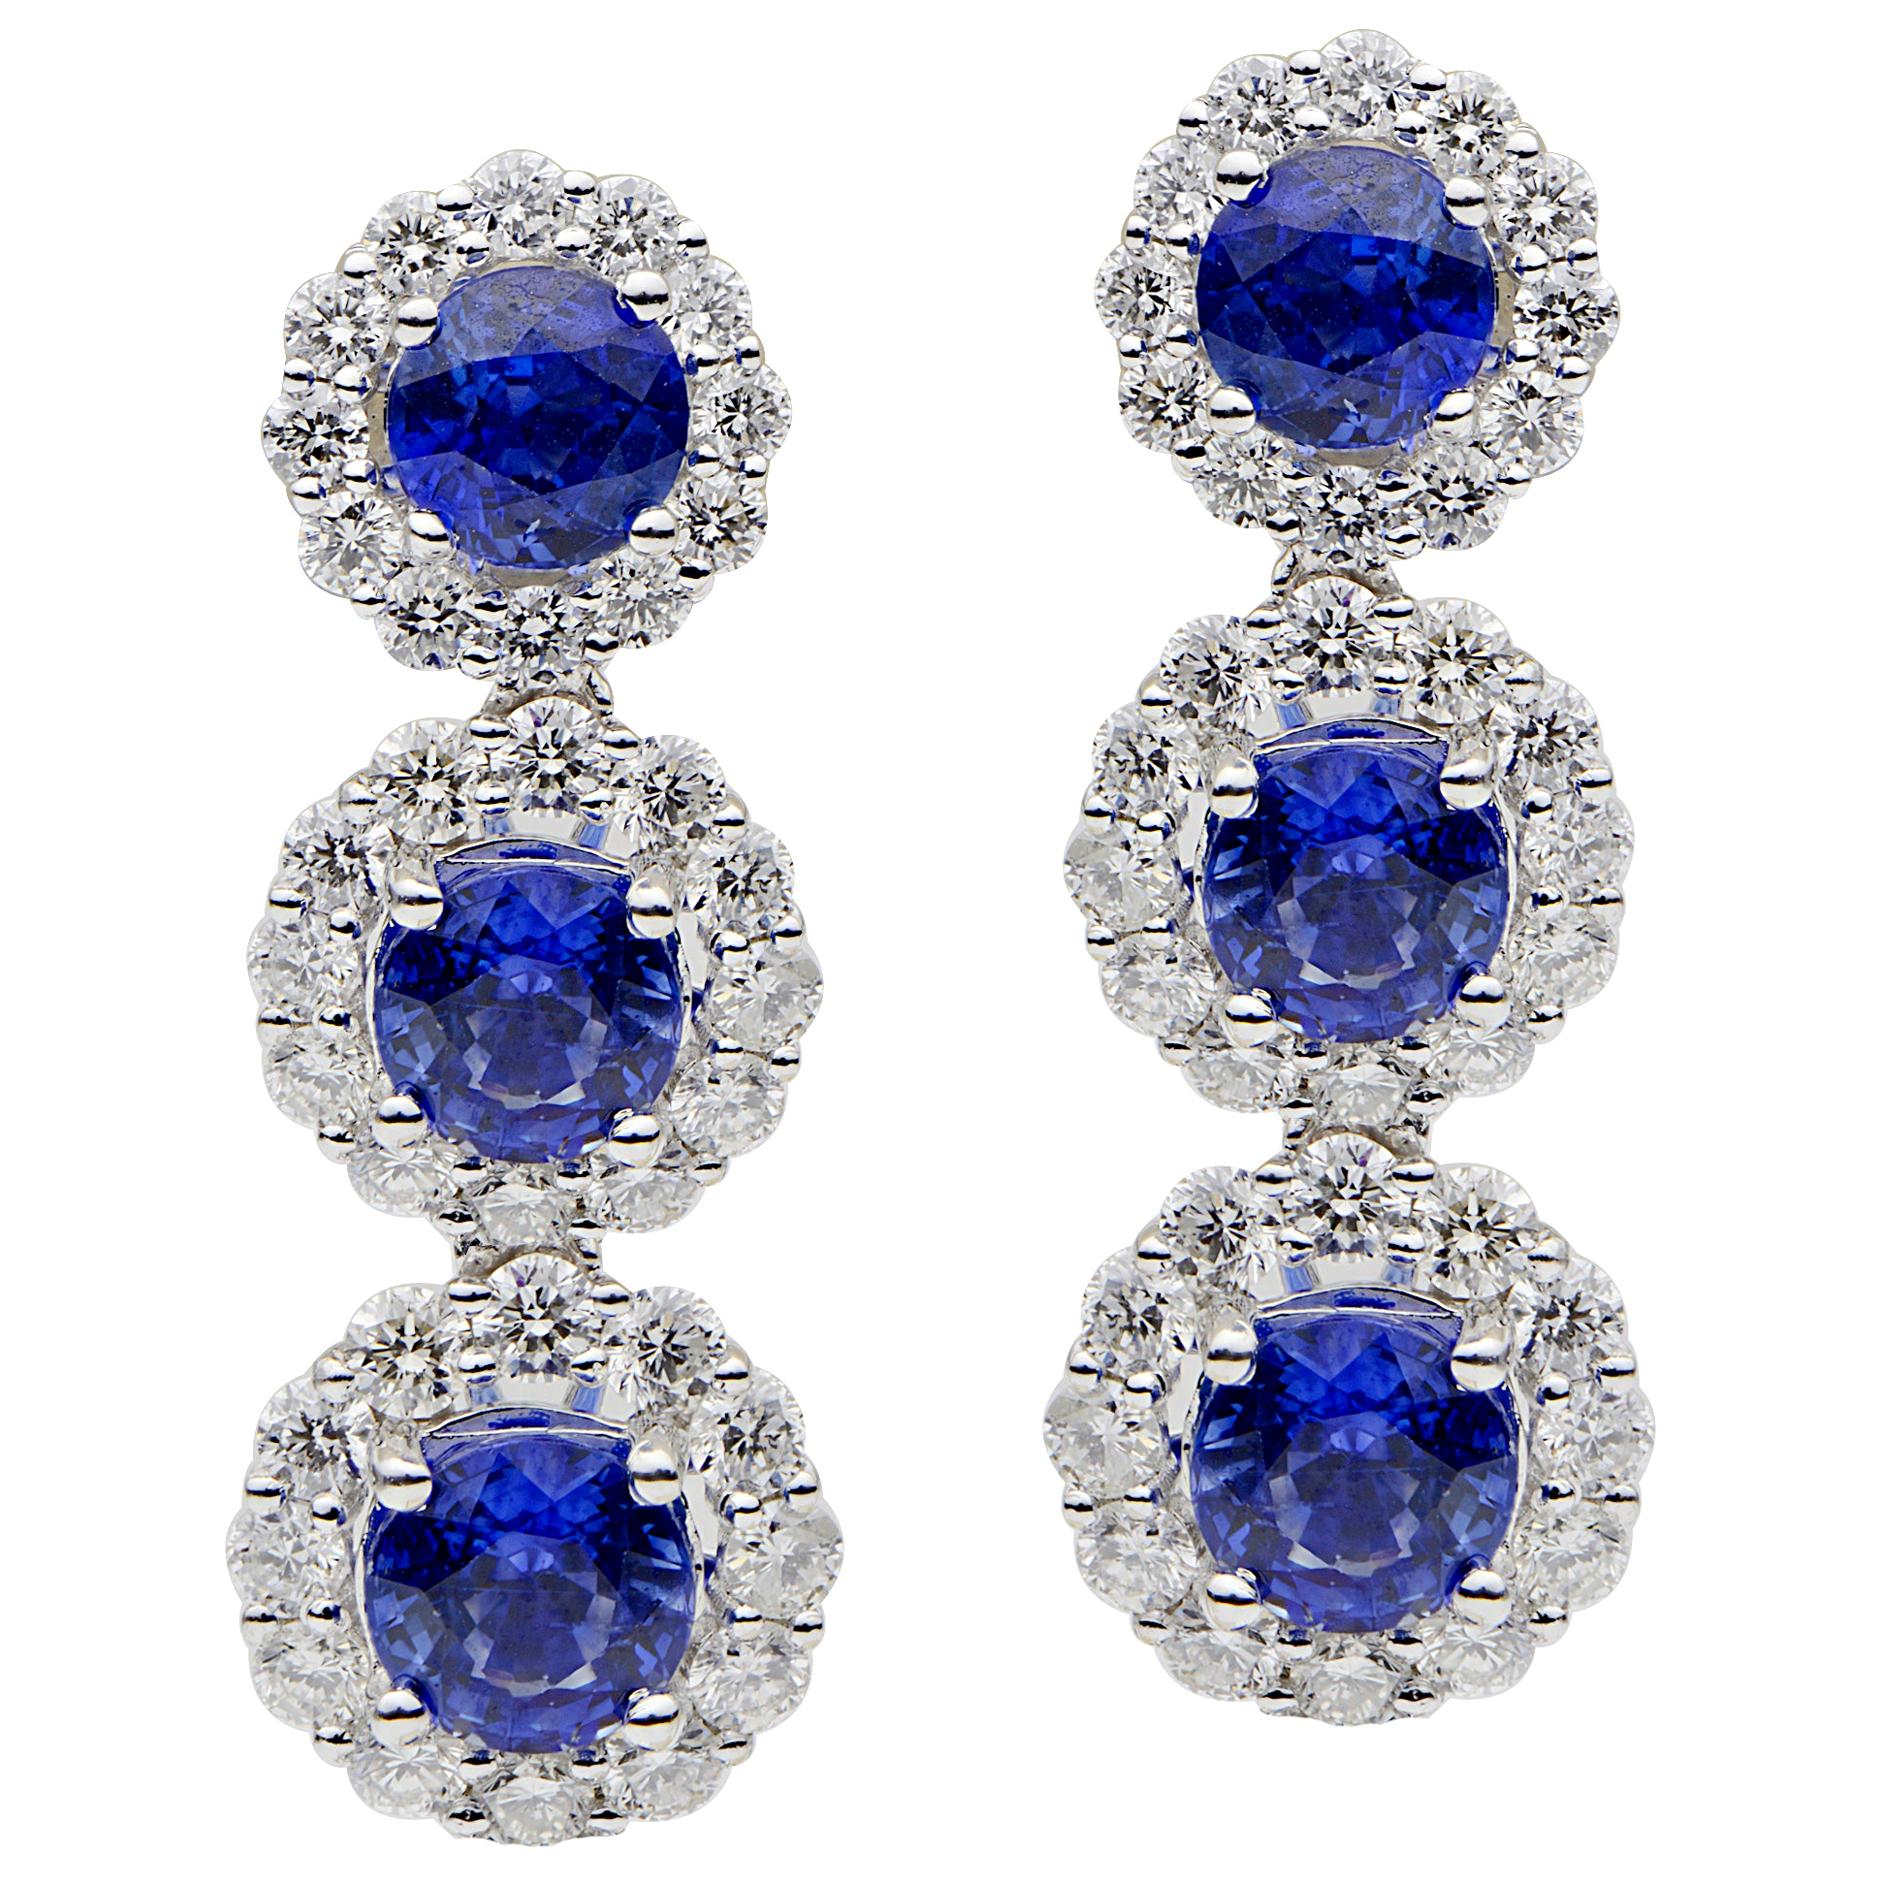 Triple Sapphire with Diamond Halo Earrings